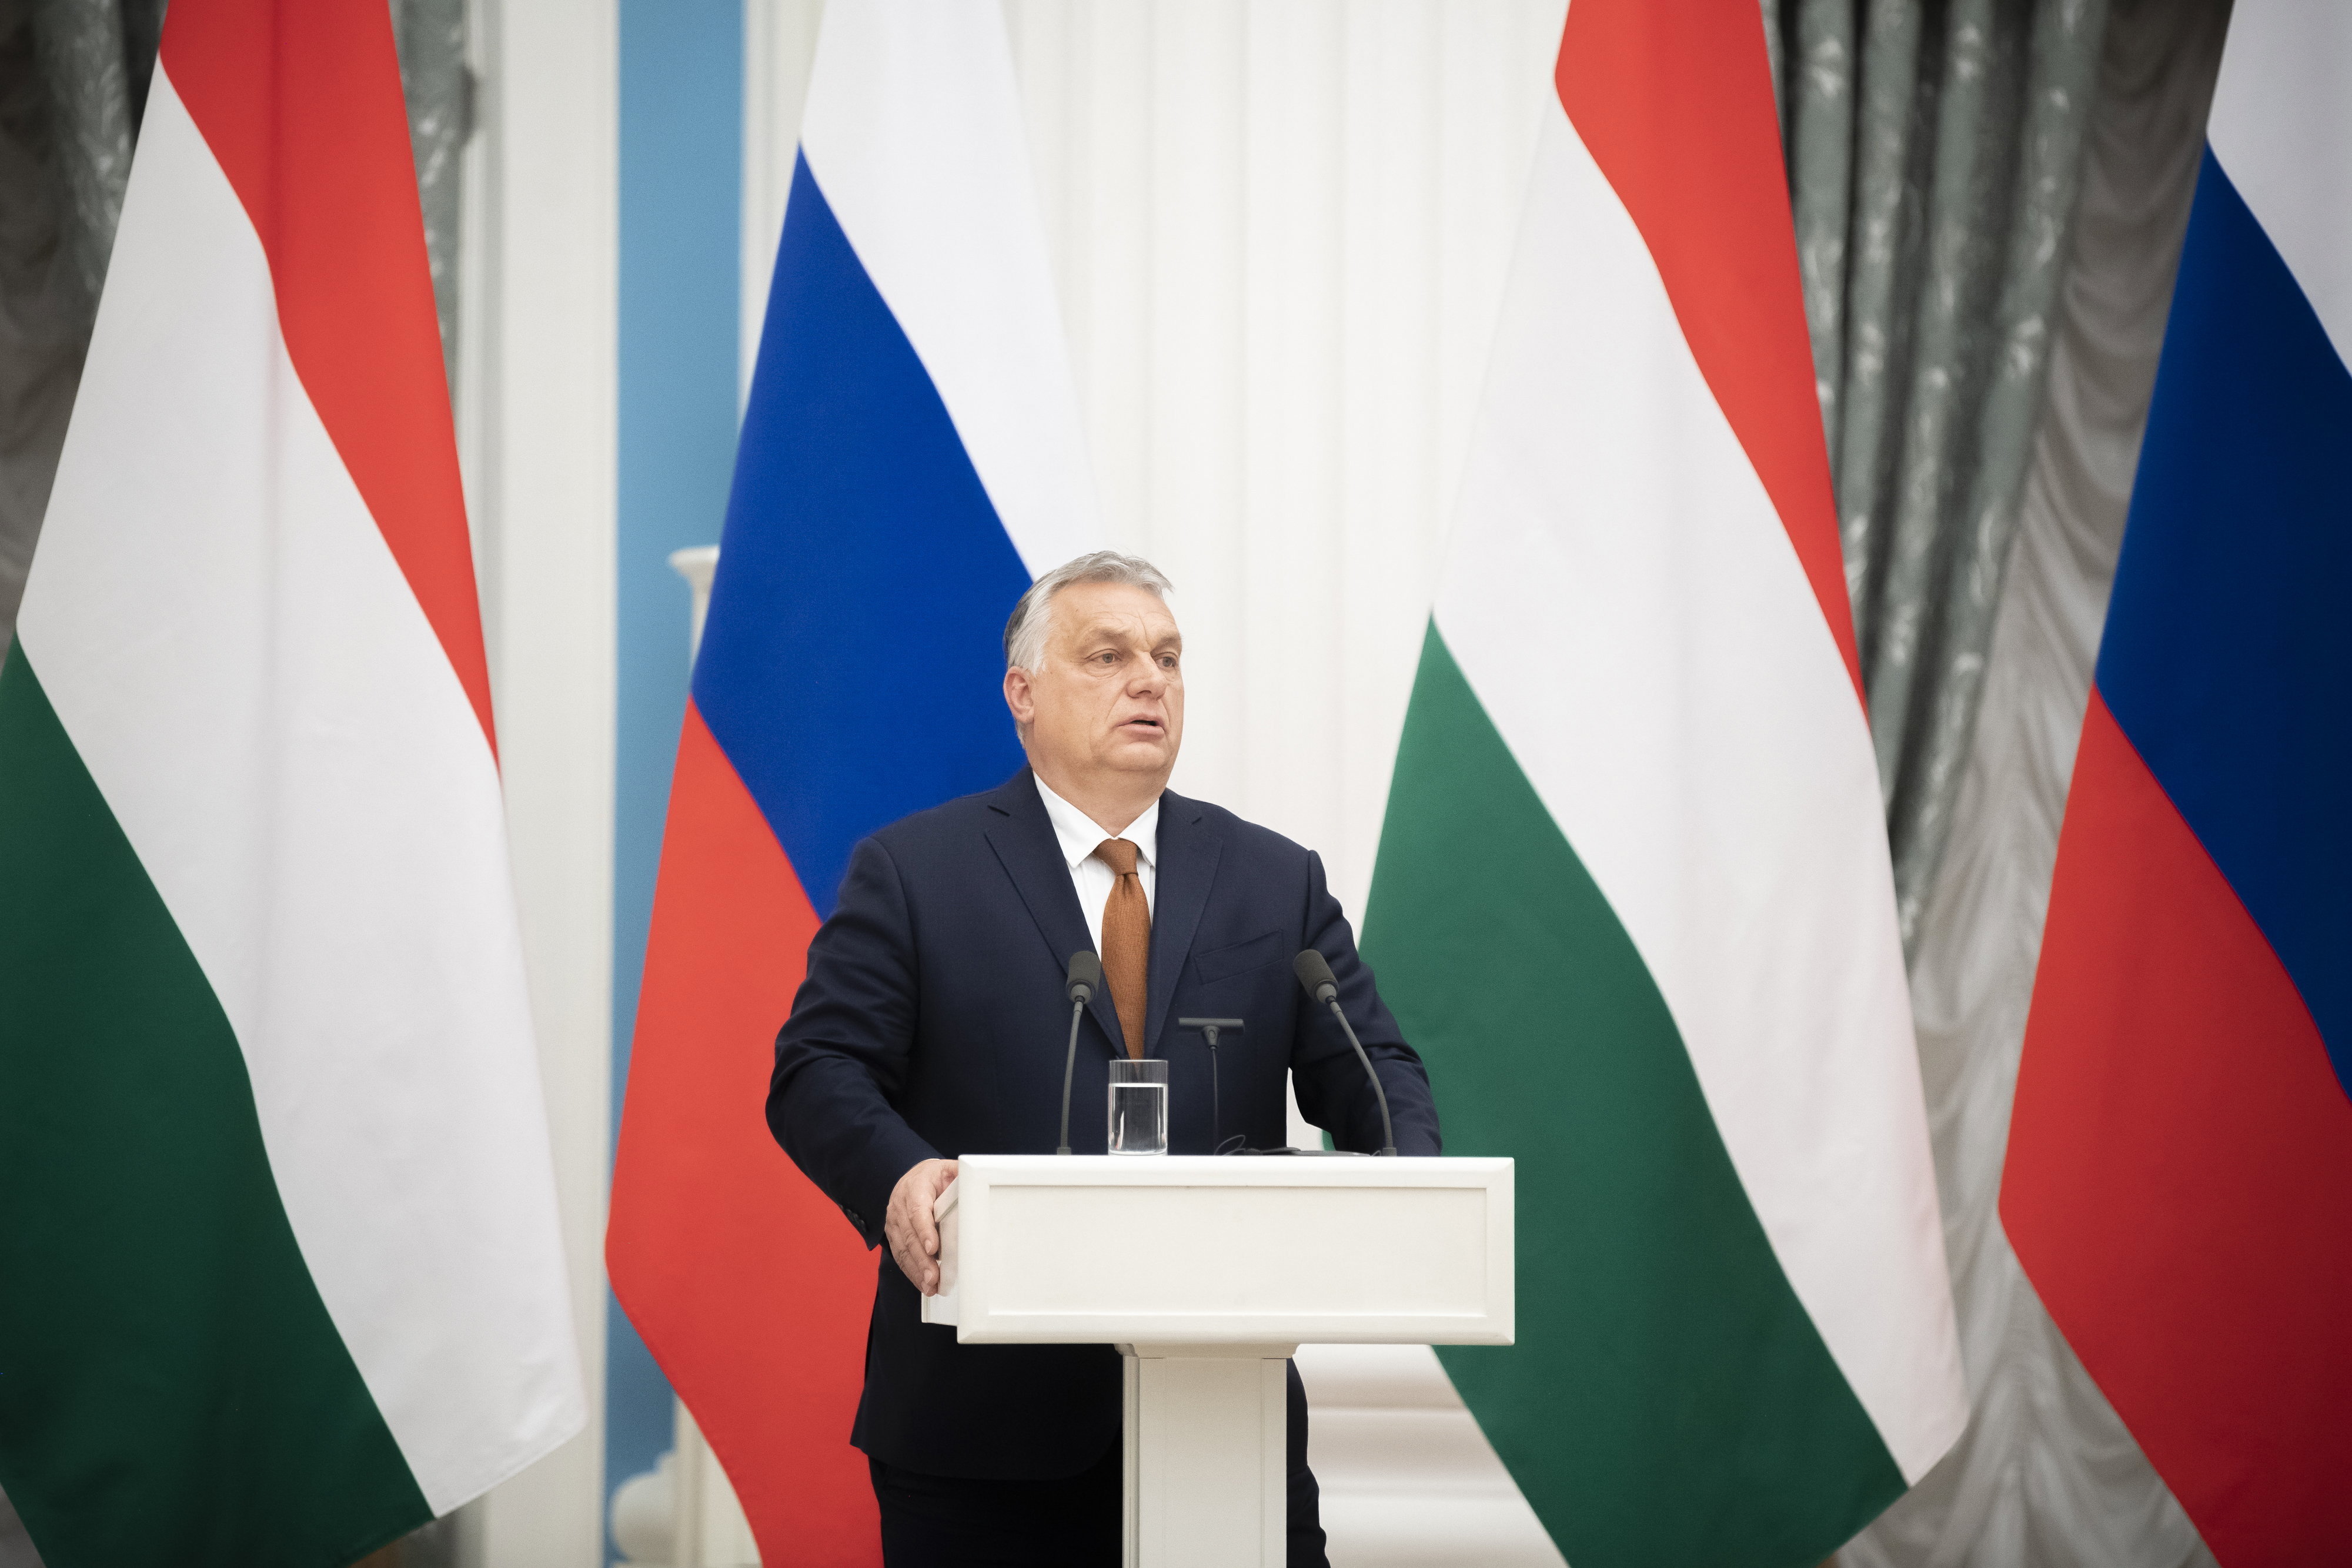 Orbán after Putin Meeting: 